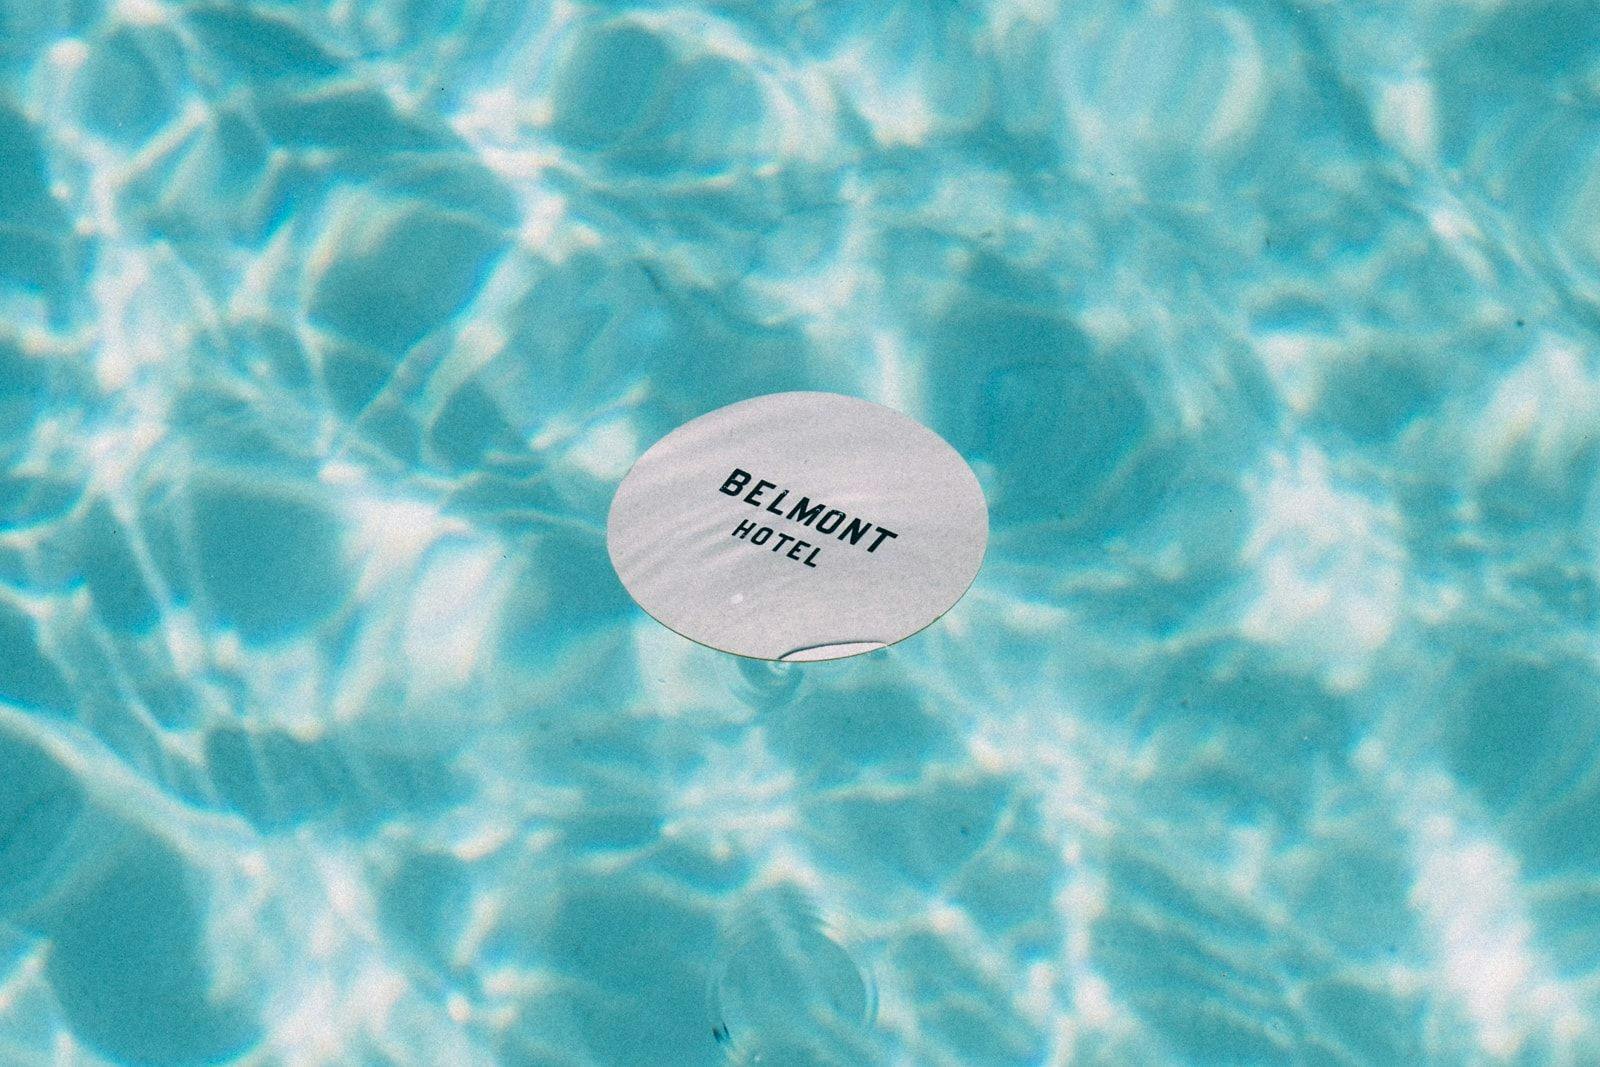 Belmont Hotel coaster floating in pool